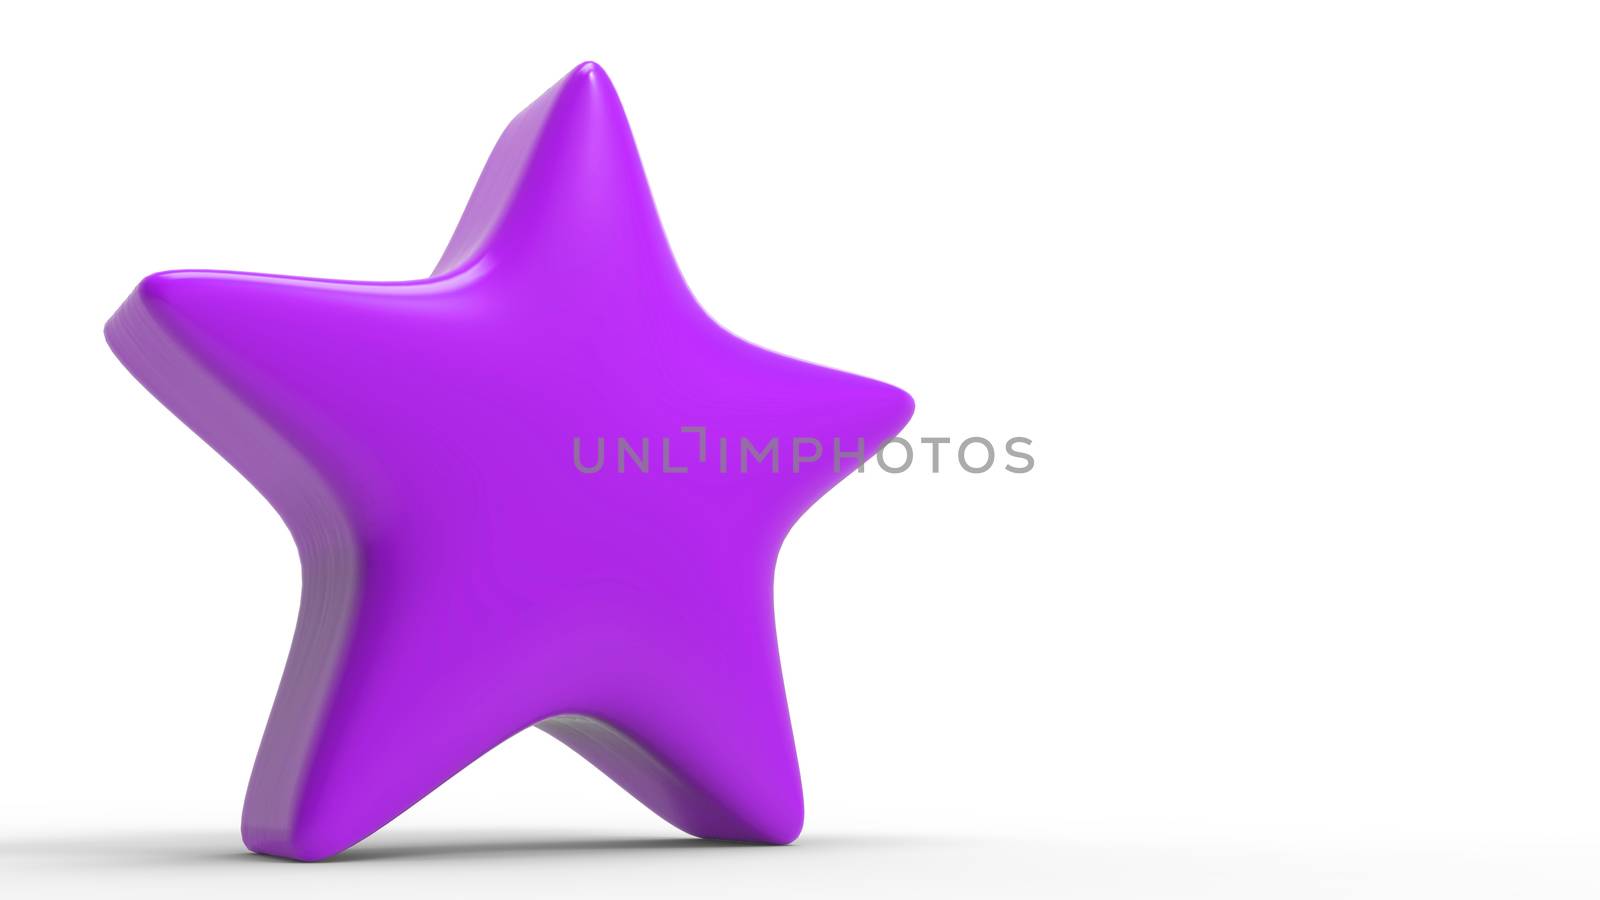 3d violet star on color background. Render and illustration of golden star for premium reviews by Andreajk3